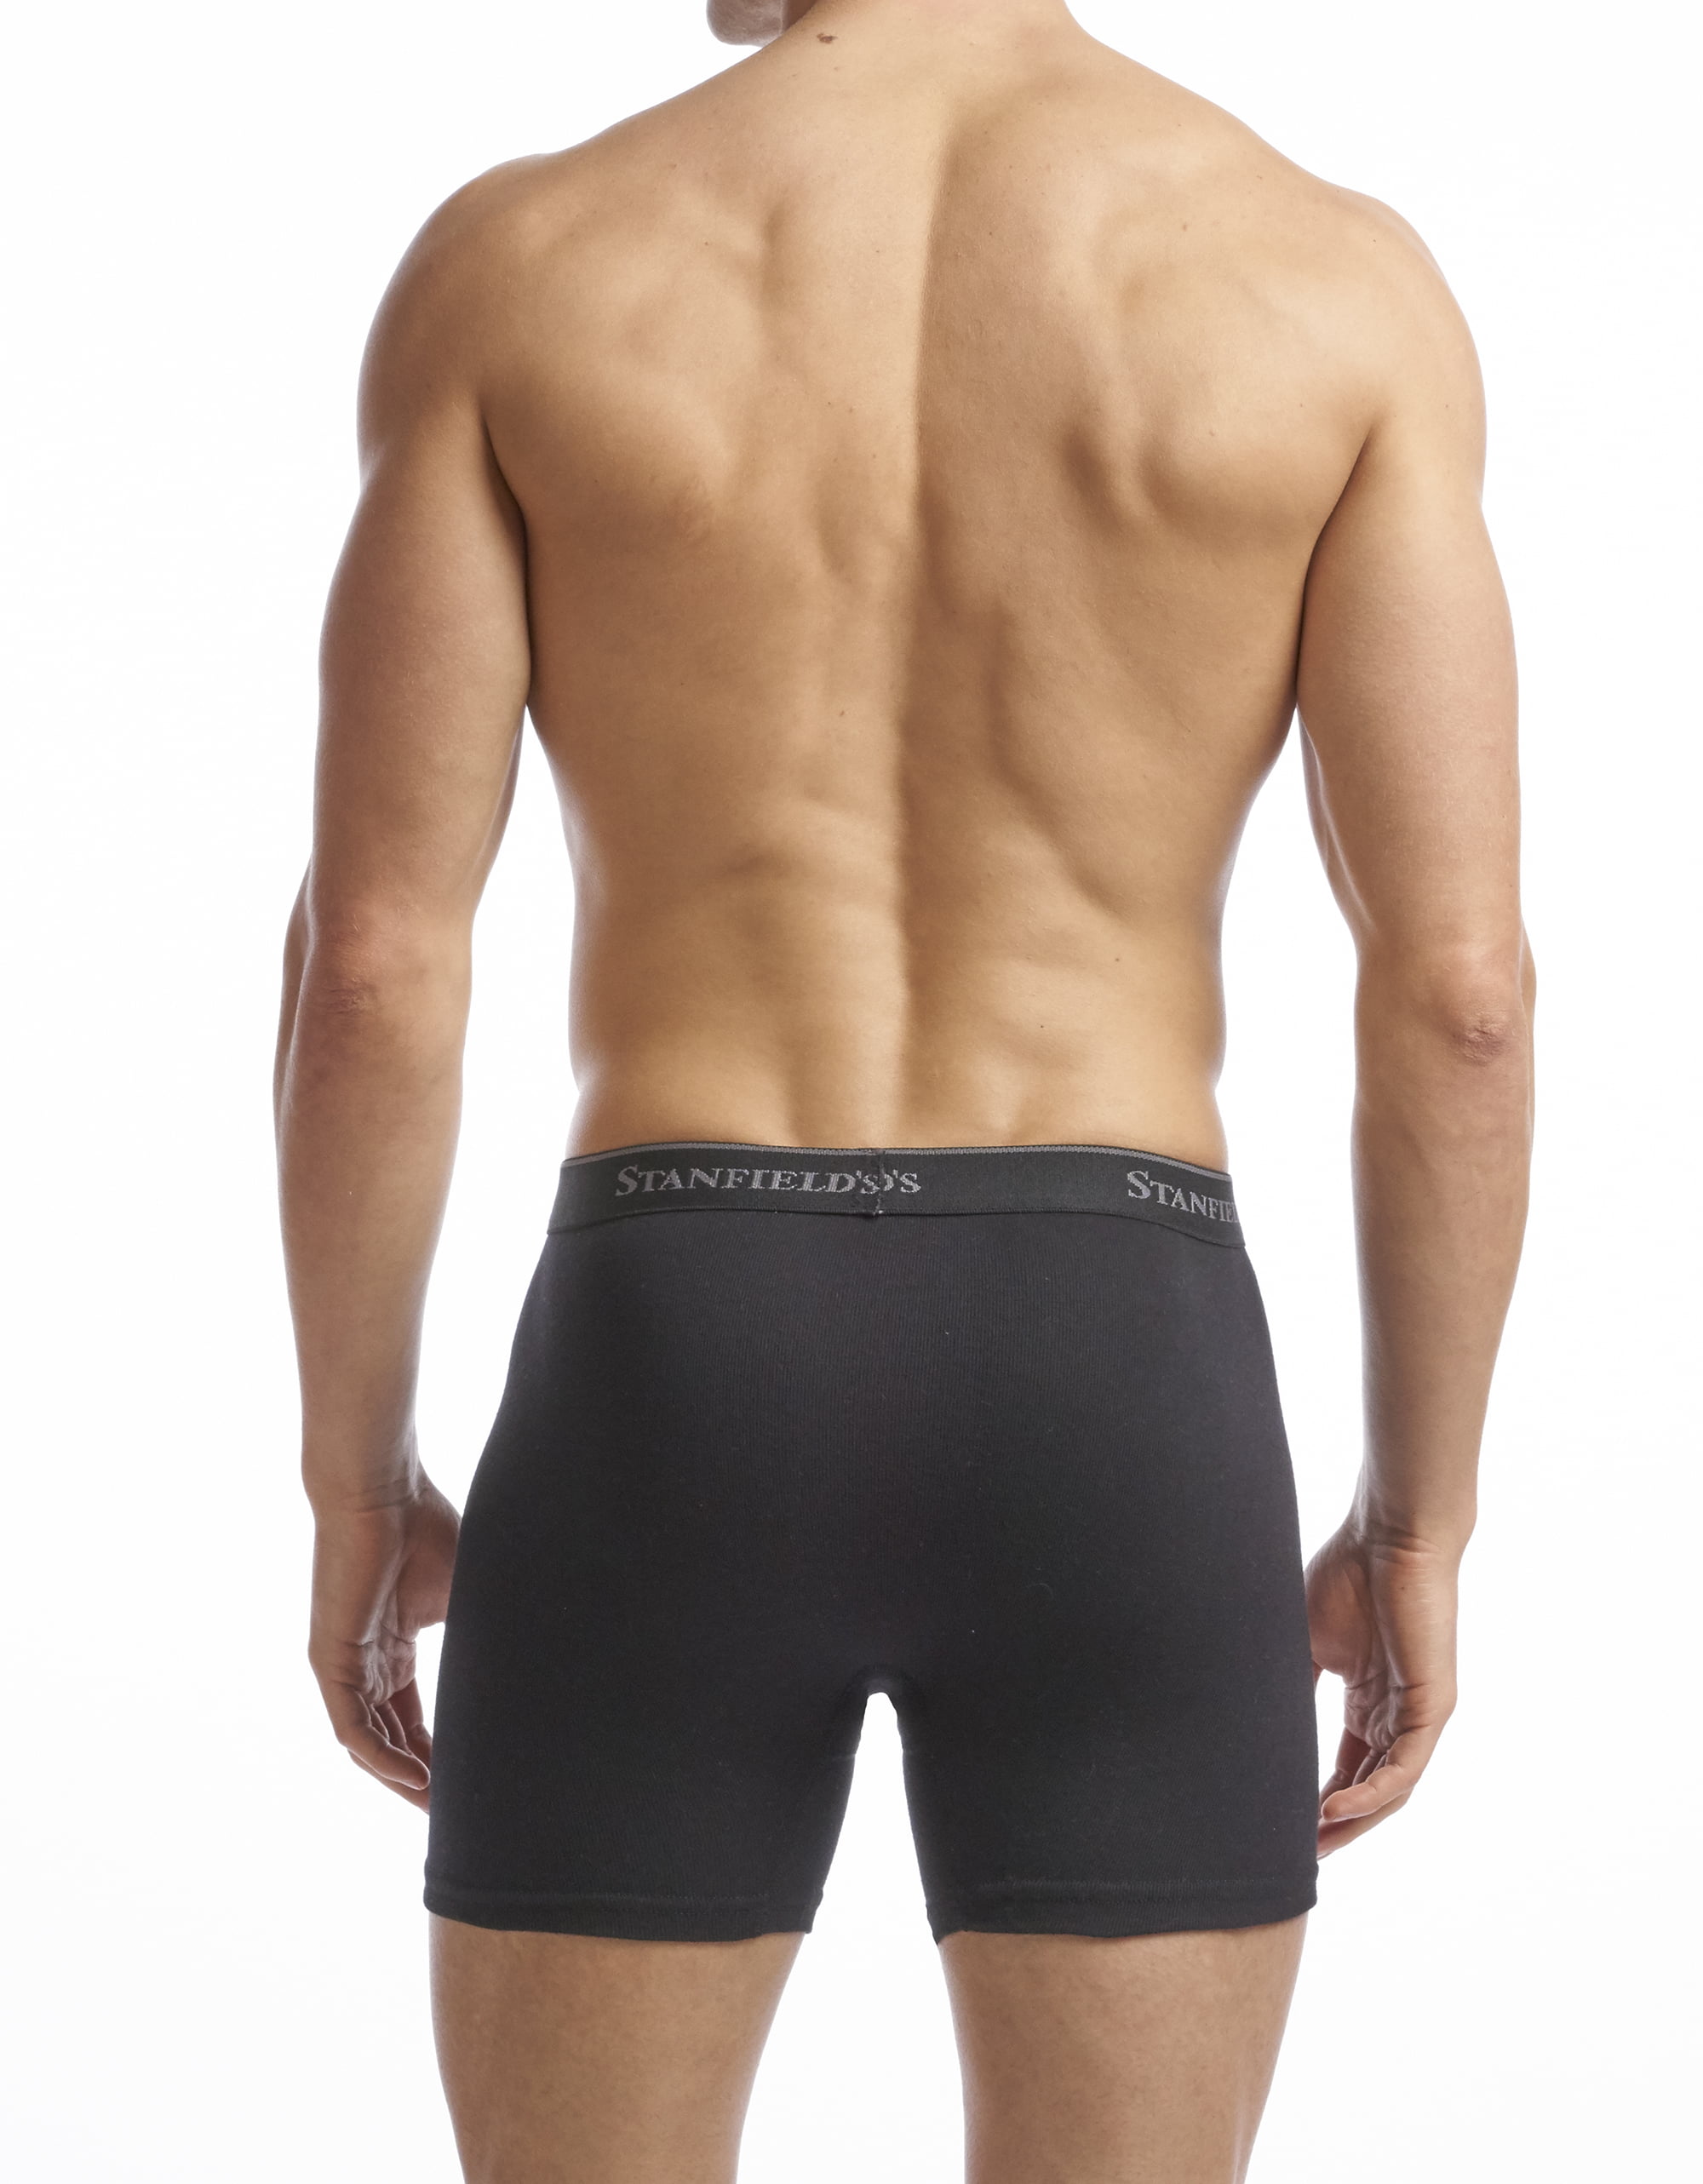 SUPREME BLACK WITH WHITE LABLE Underwear Boxer Briefs Size M (SINGLES) ONE  BOXER